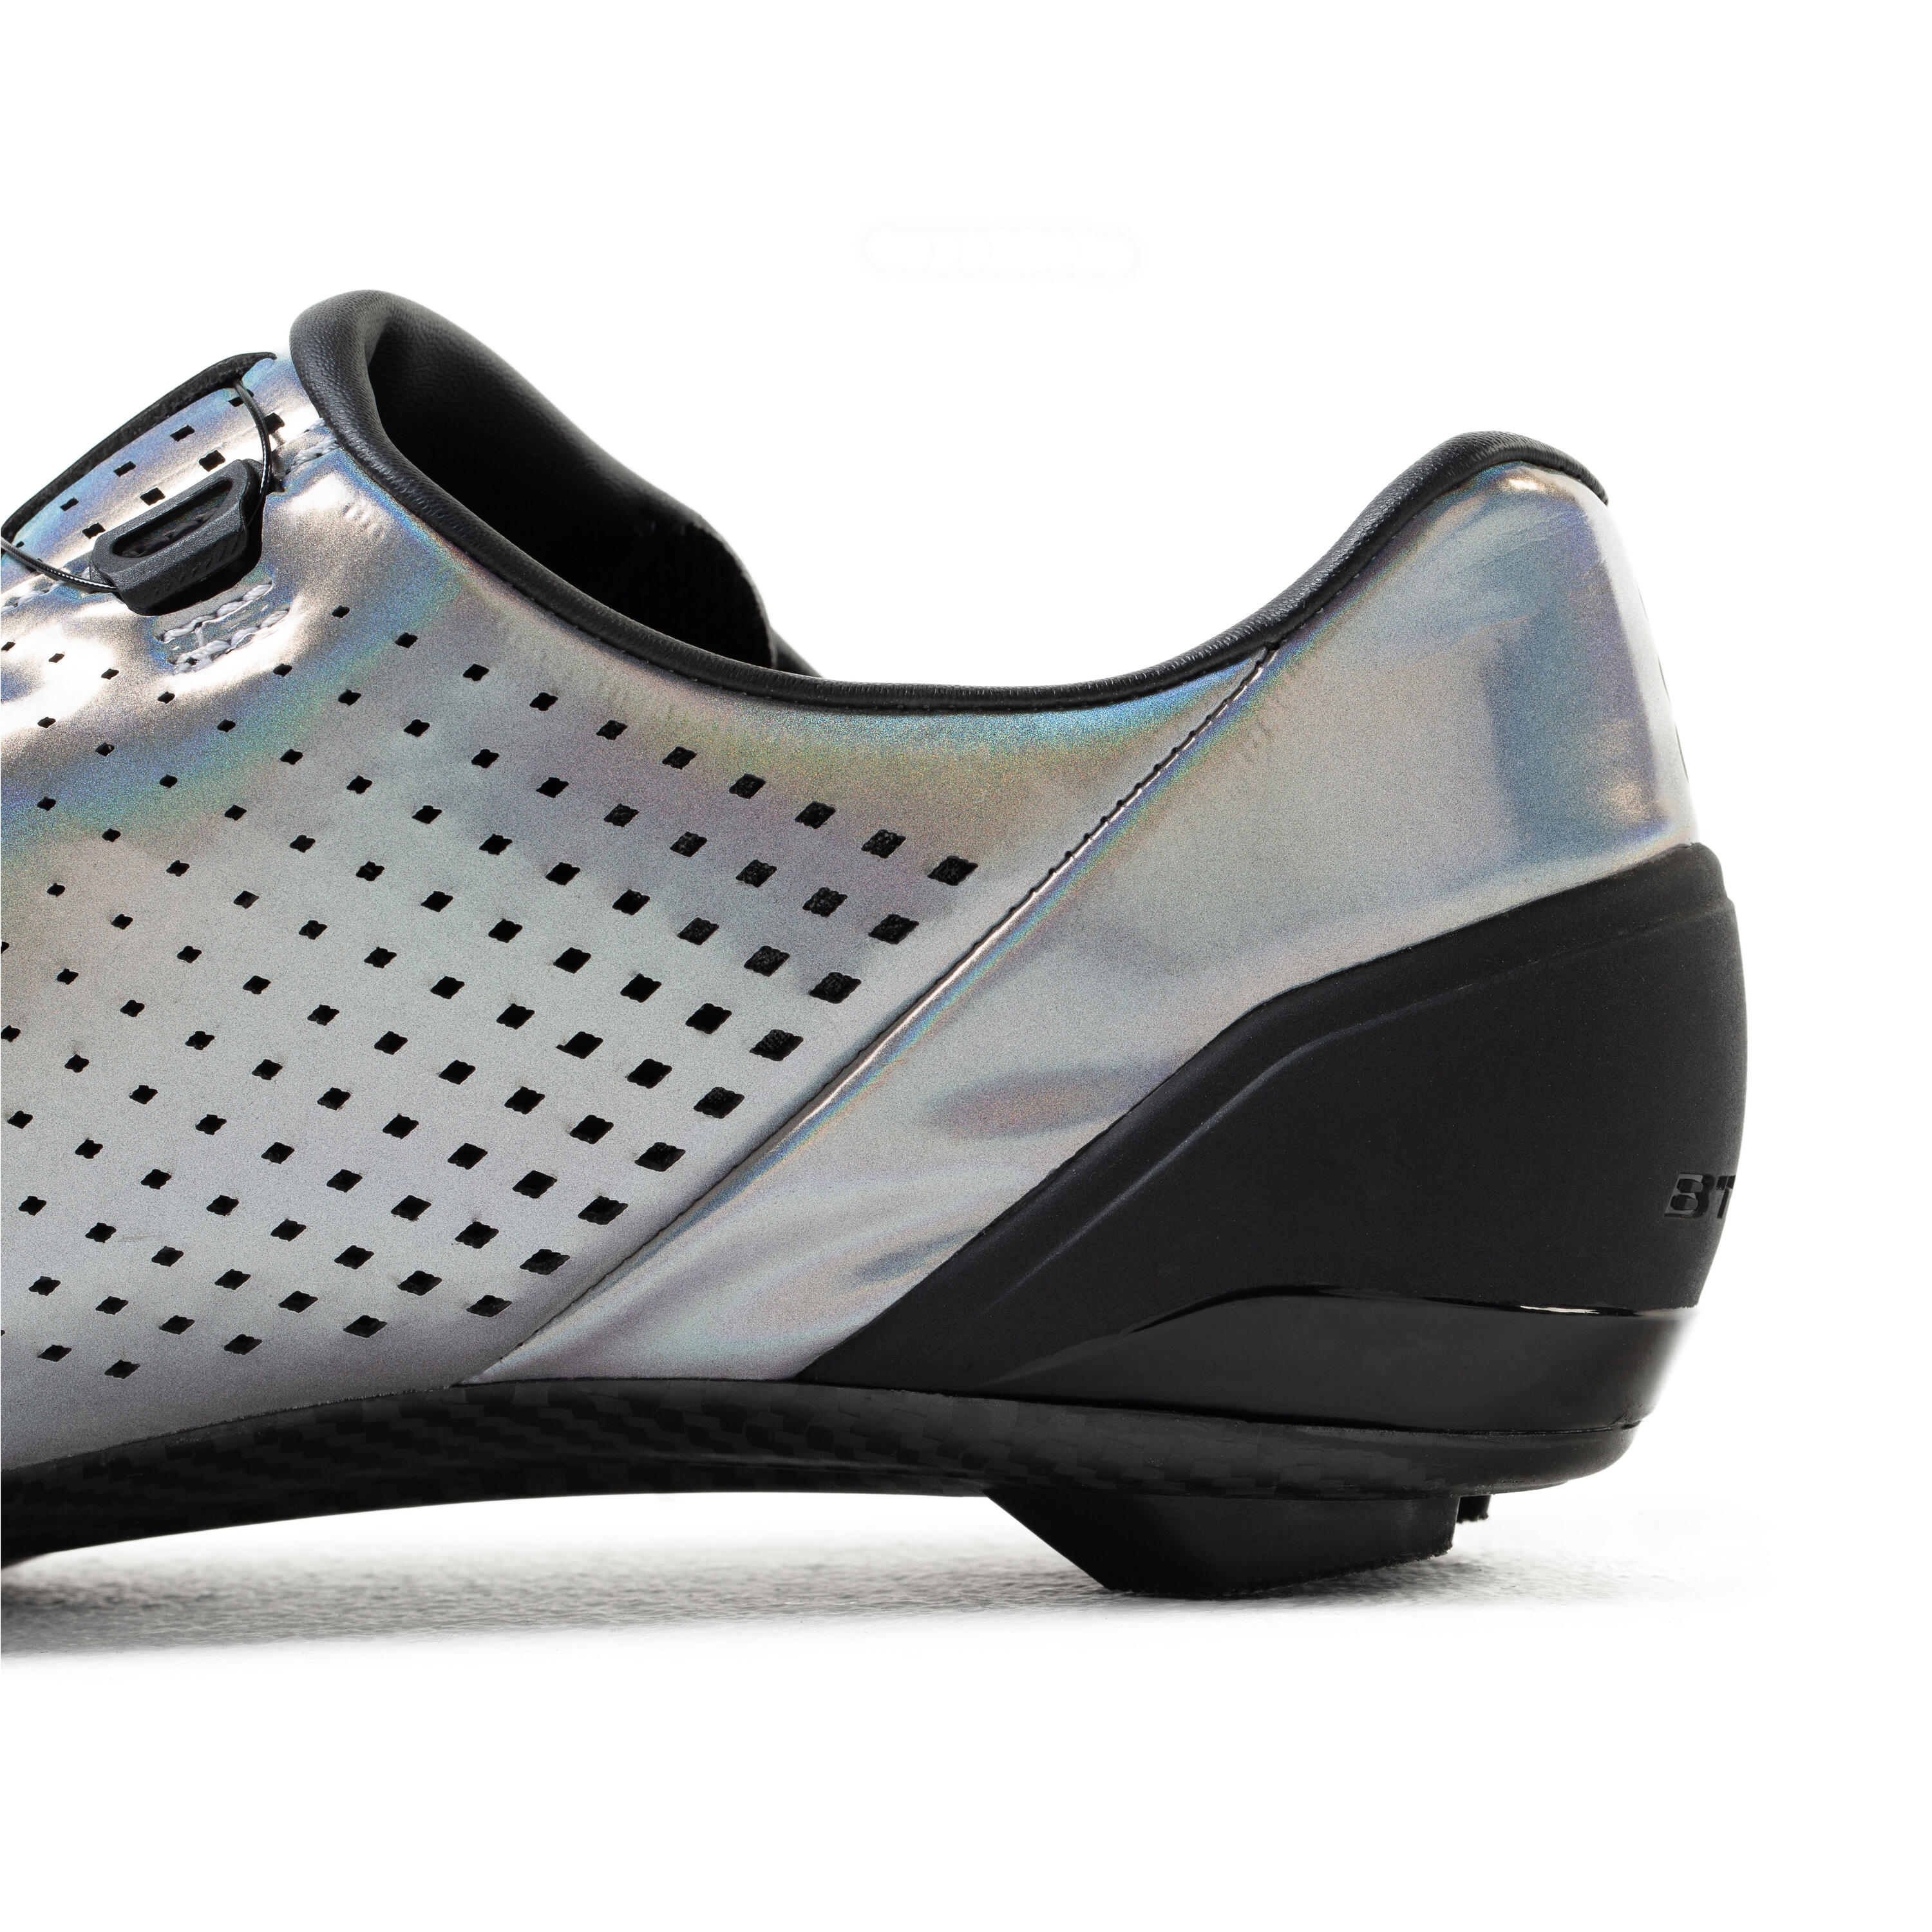 Van Rysel Sport Cycling Shoes - Iridescent Grey 6/9